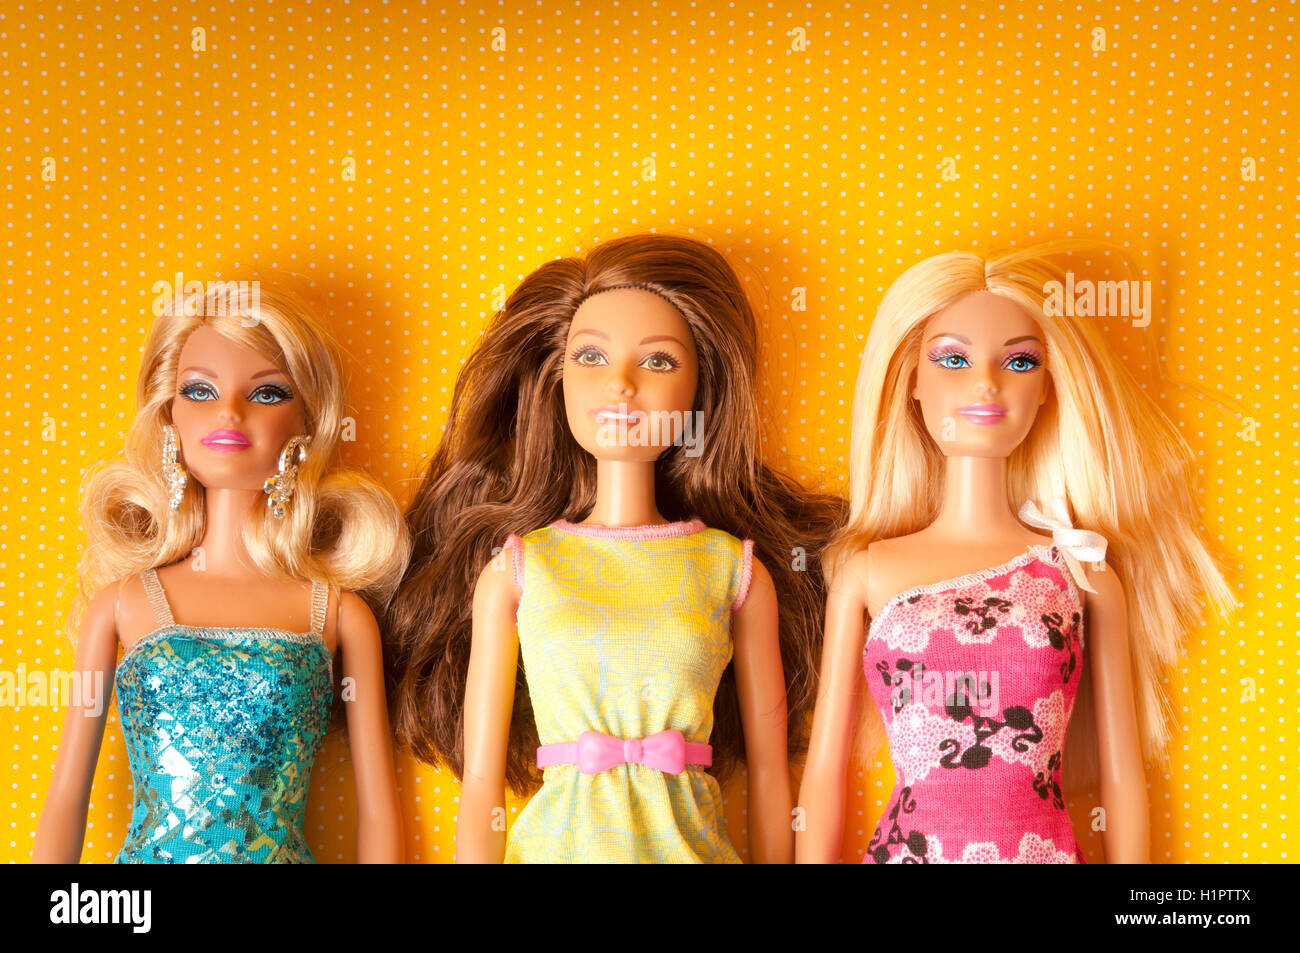 three Barbie dolls Stock Photo